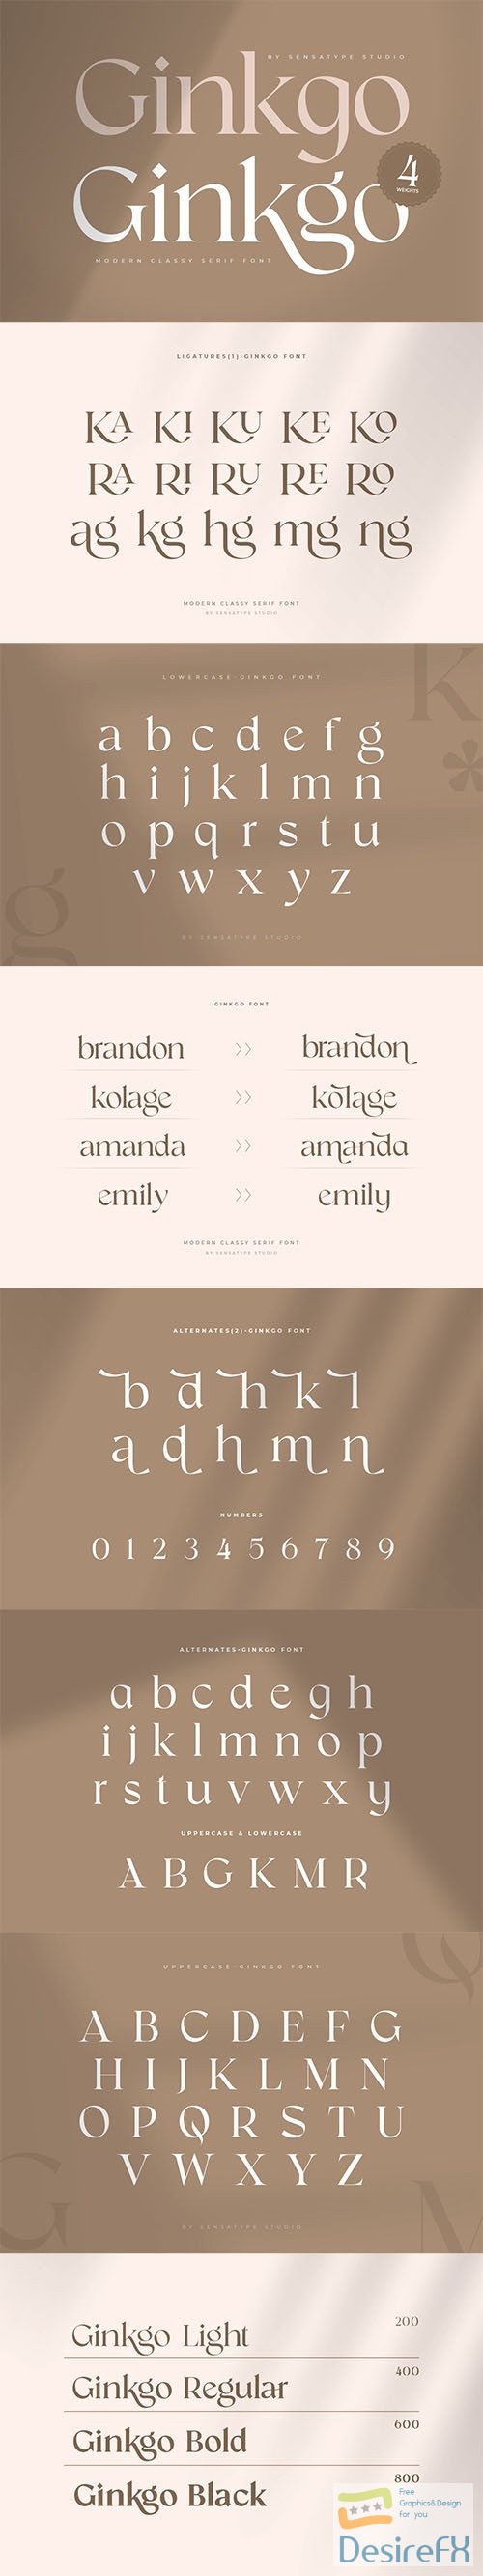 Ginkgo - Modern Classy Serif Font